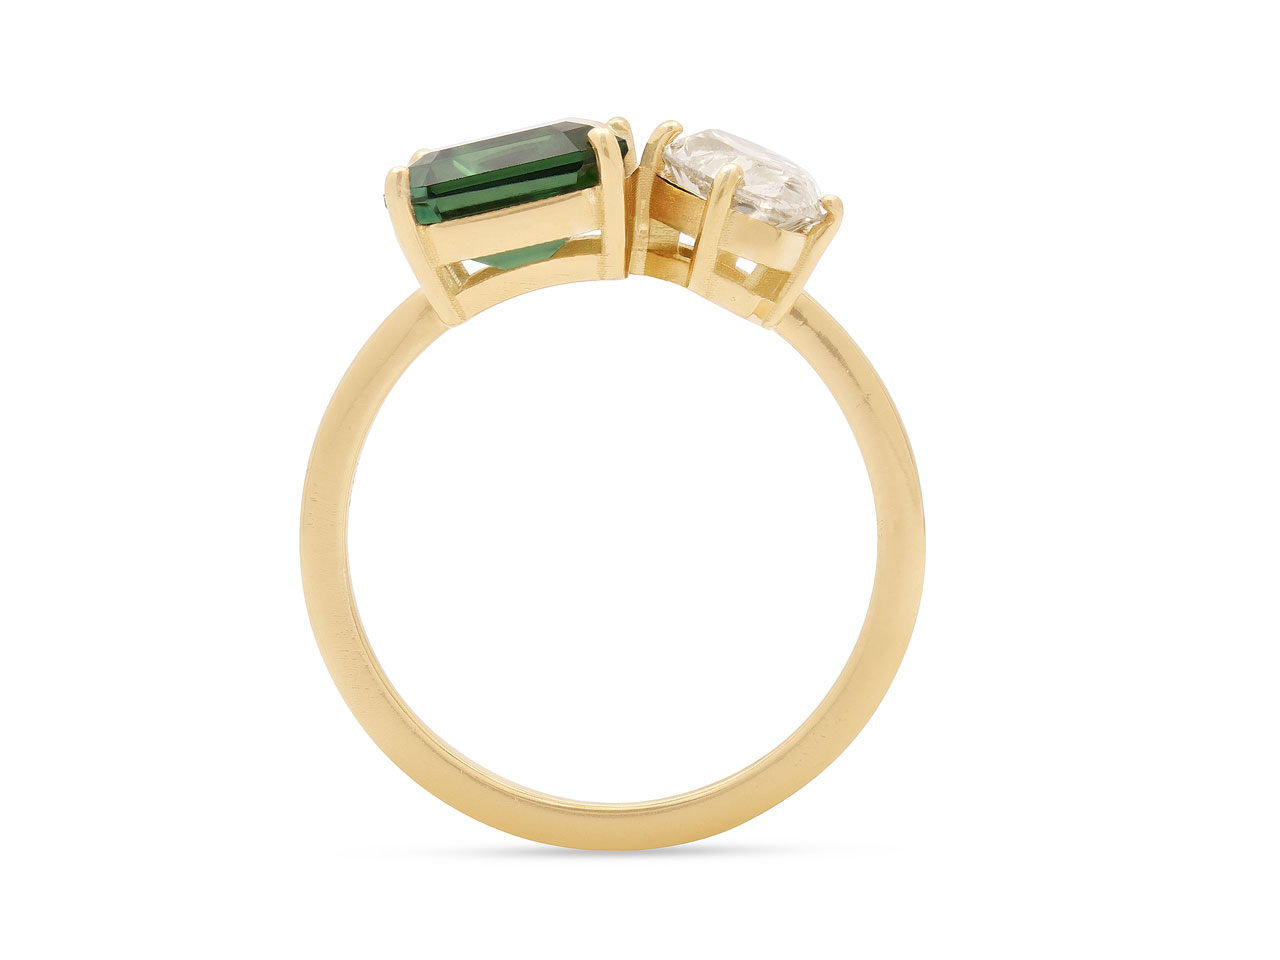 Beladora 'Bespoke' 'Toi et Moi' Green Tourmaline and Diamond Ring in 18K Gold